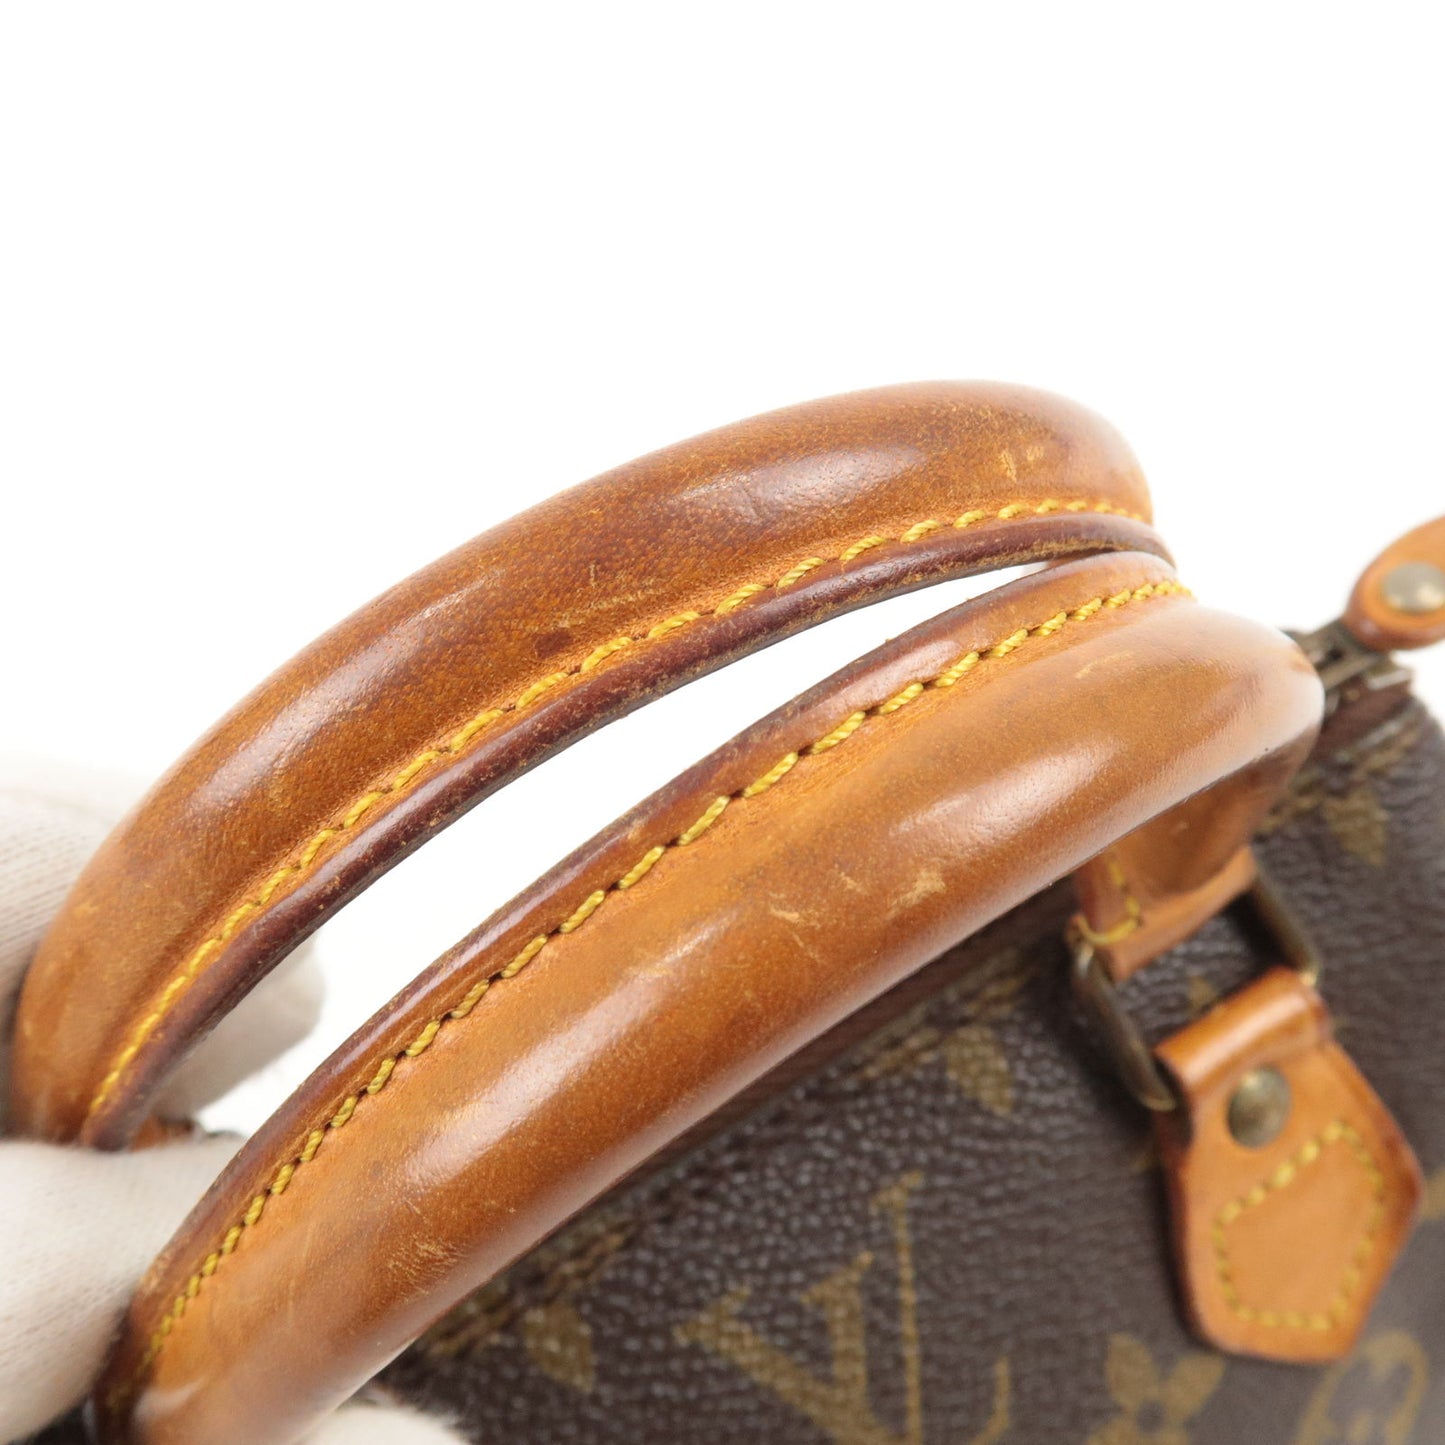 Louis Vuitton Mini Speedy Handbag Purse Monogram M41534 TH1918